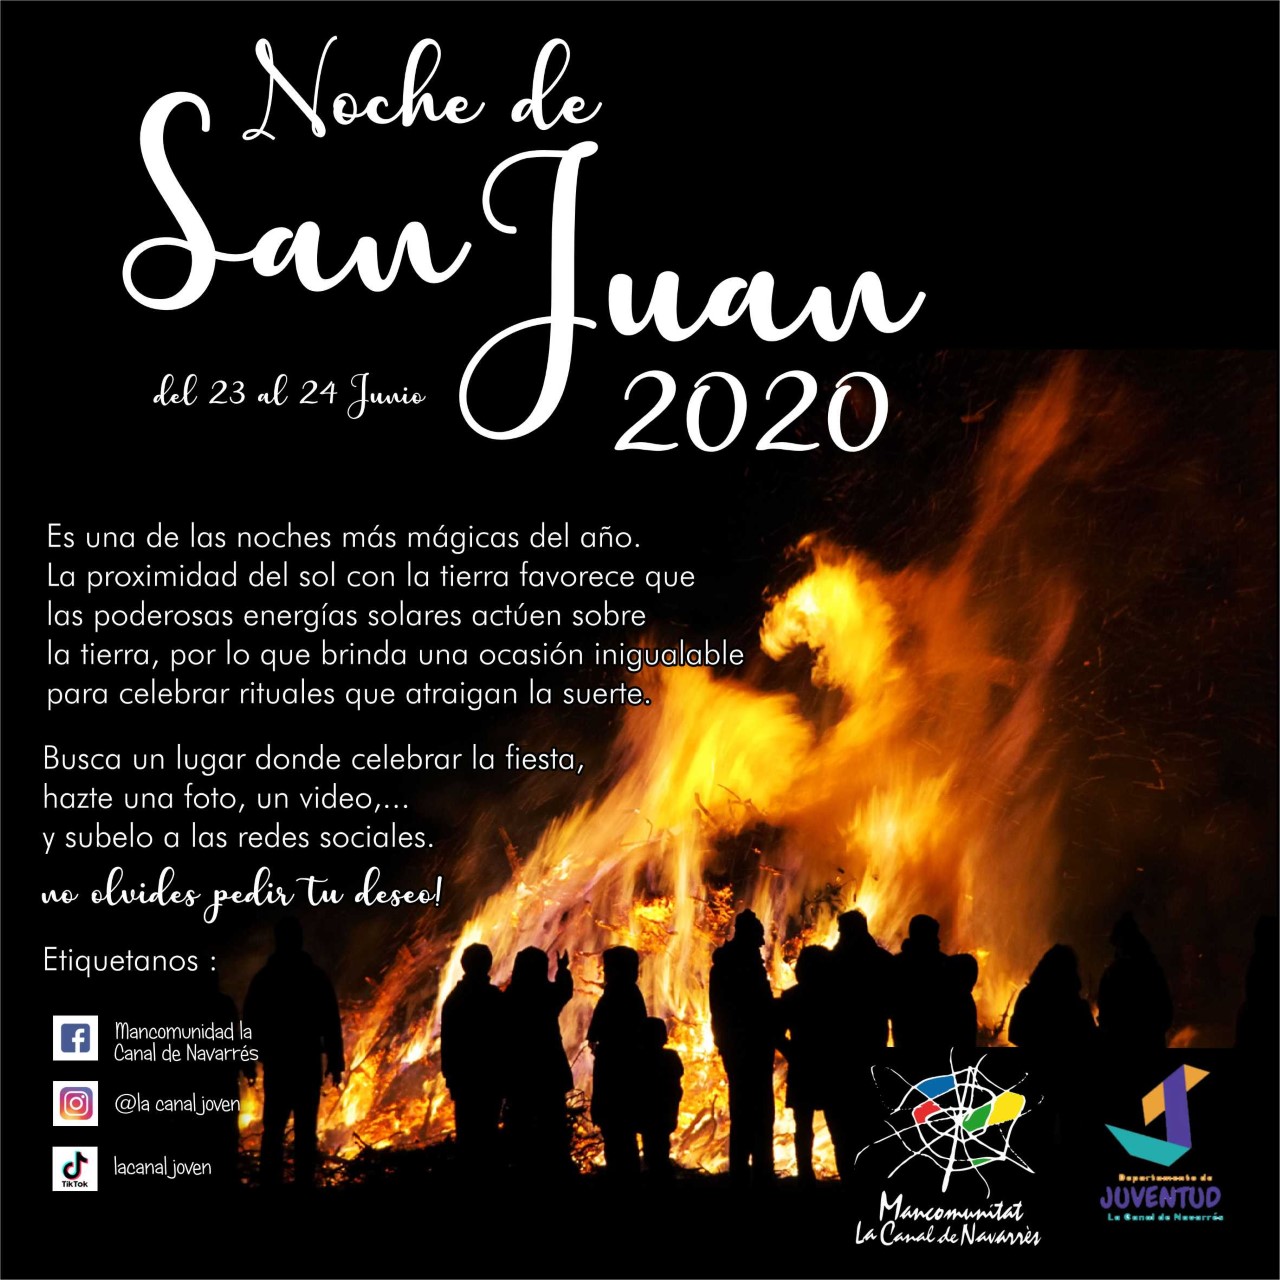 NIT DE SAN JOAN 2020